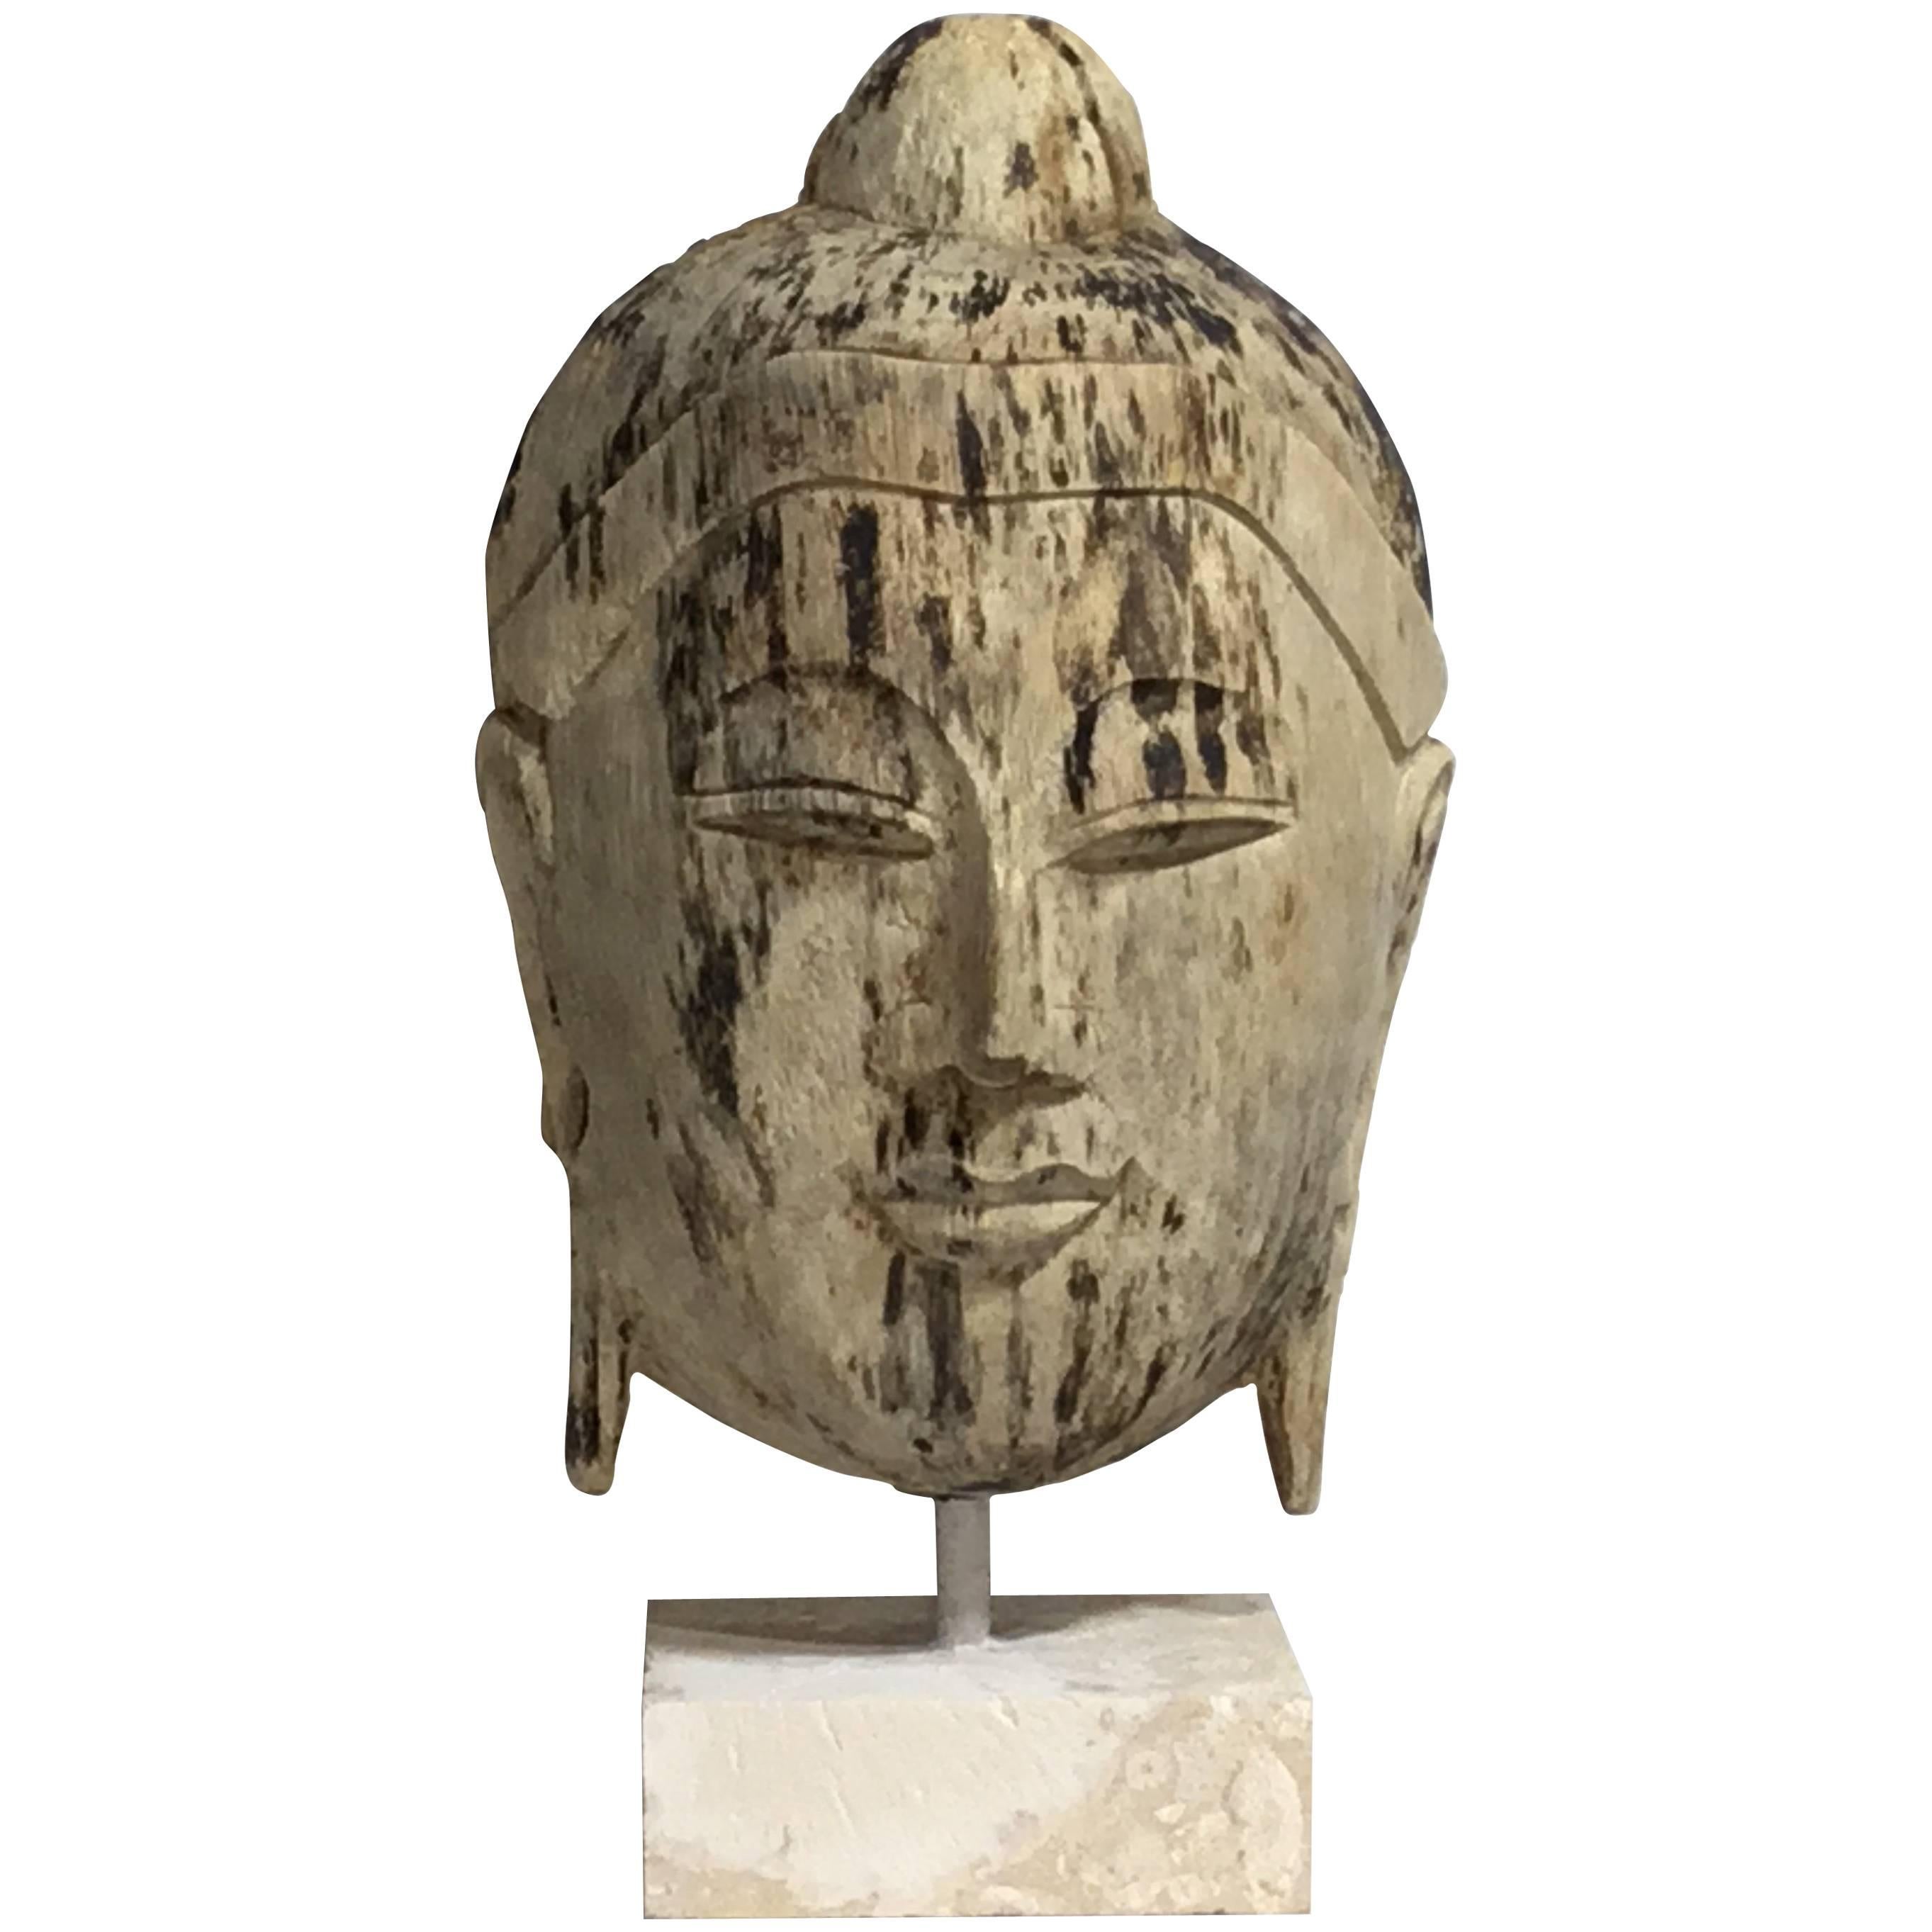 Antique Hand-Carved Wood Buddha Head 